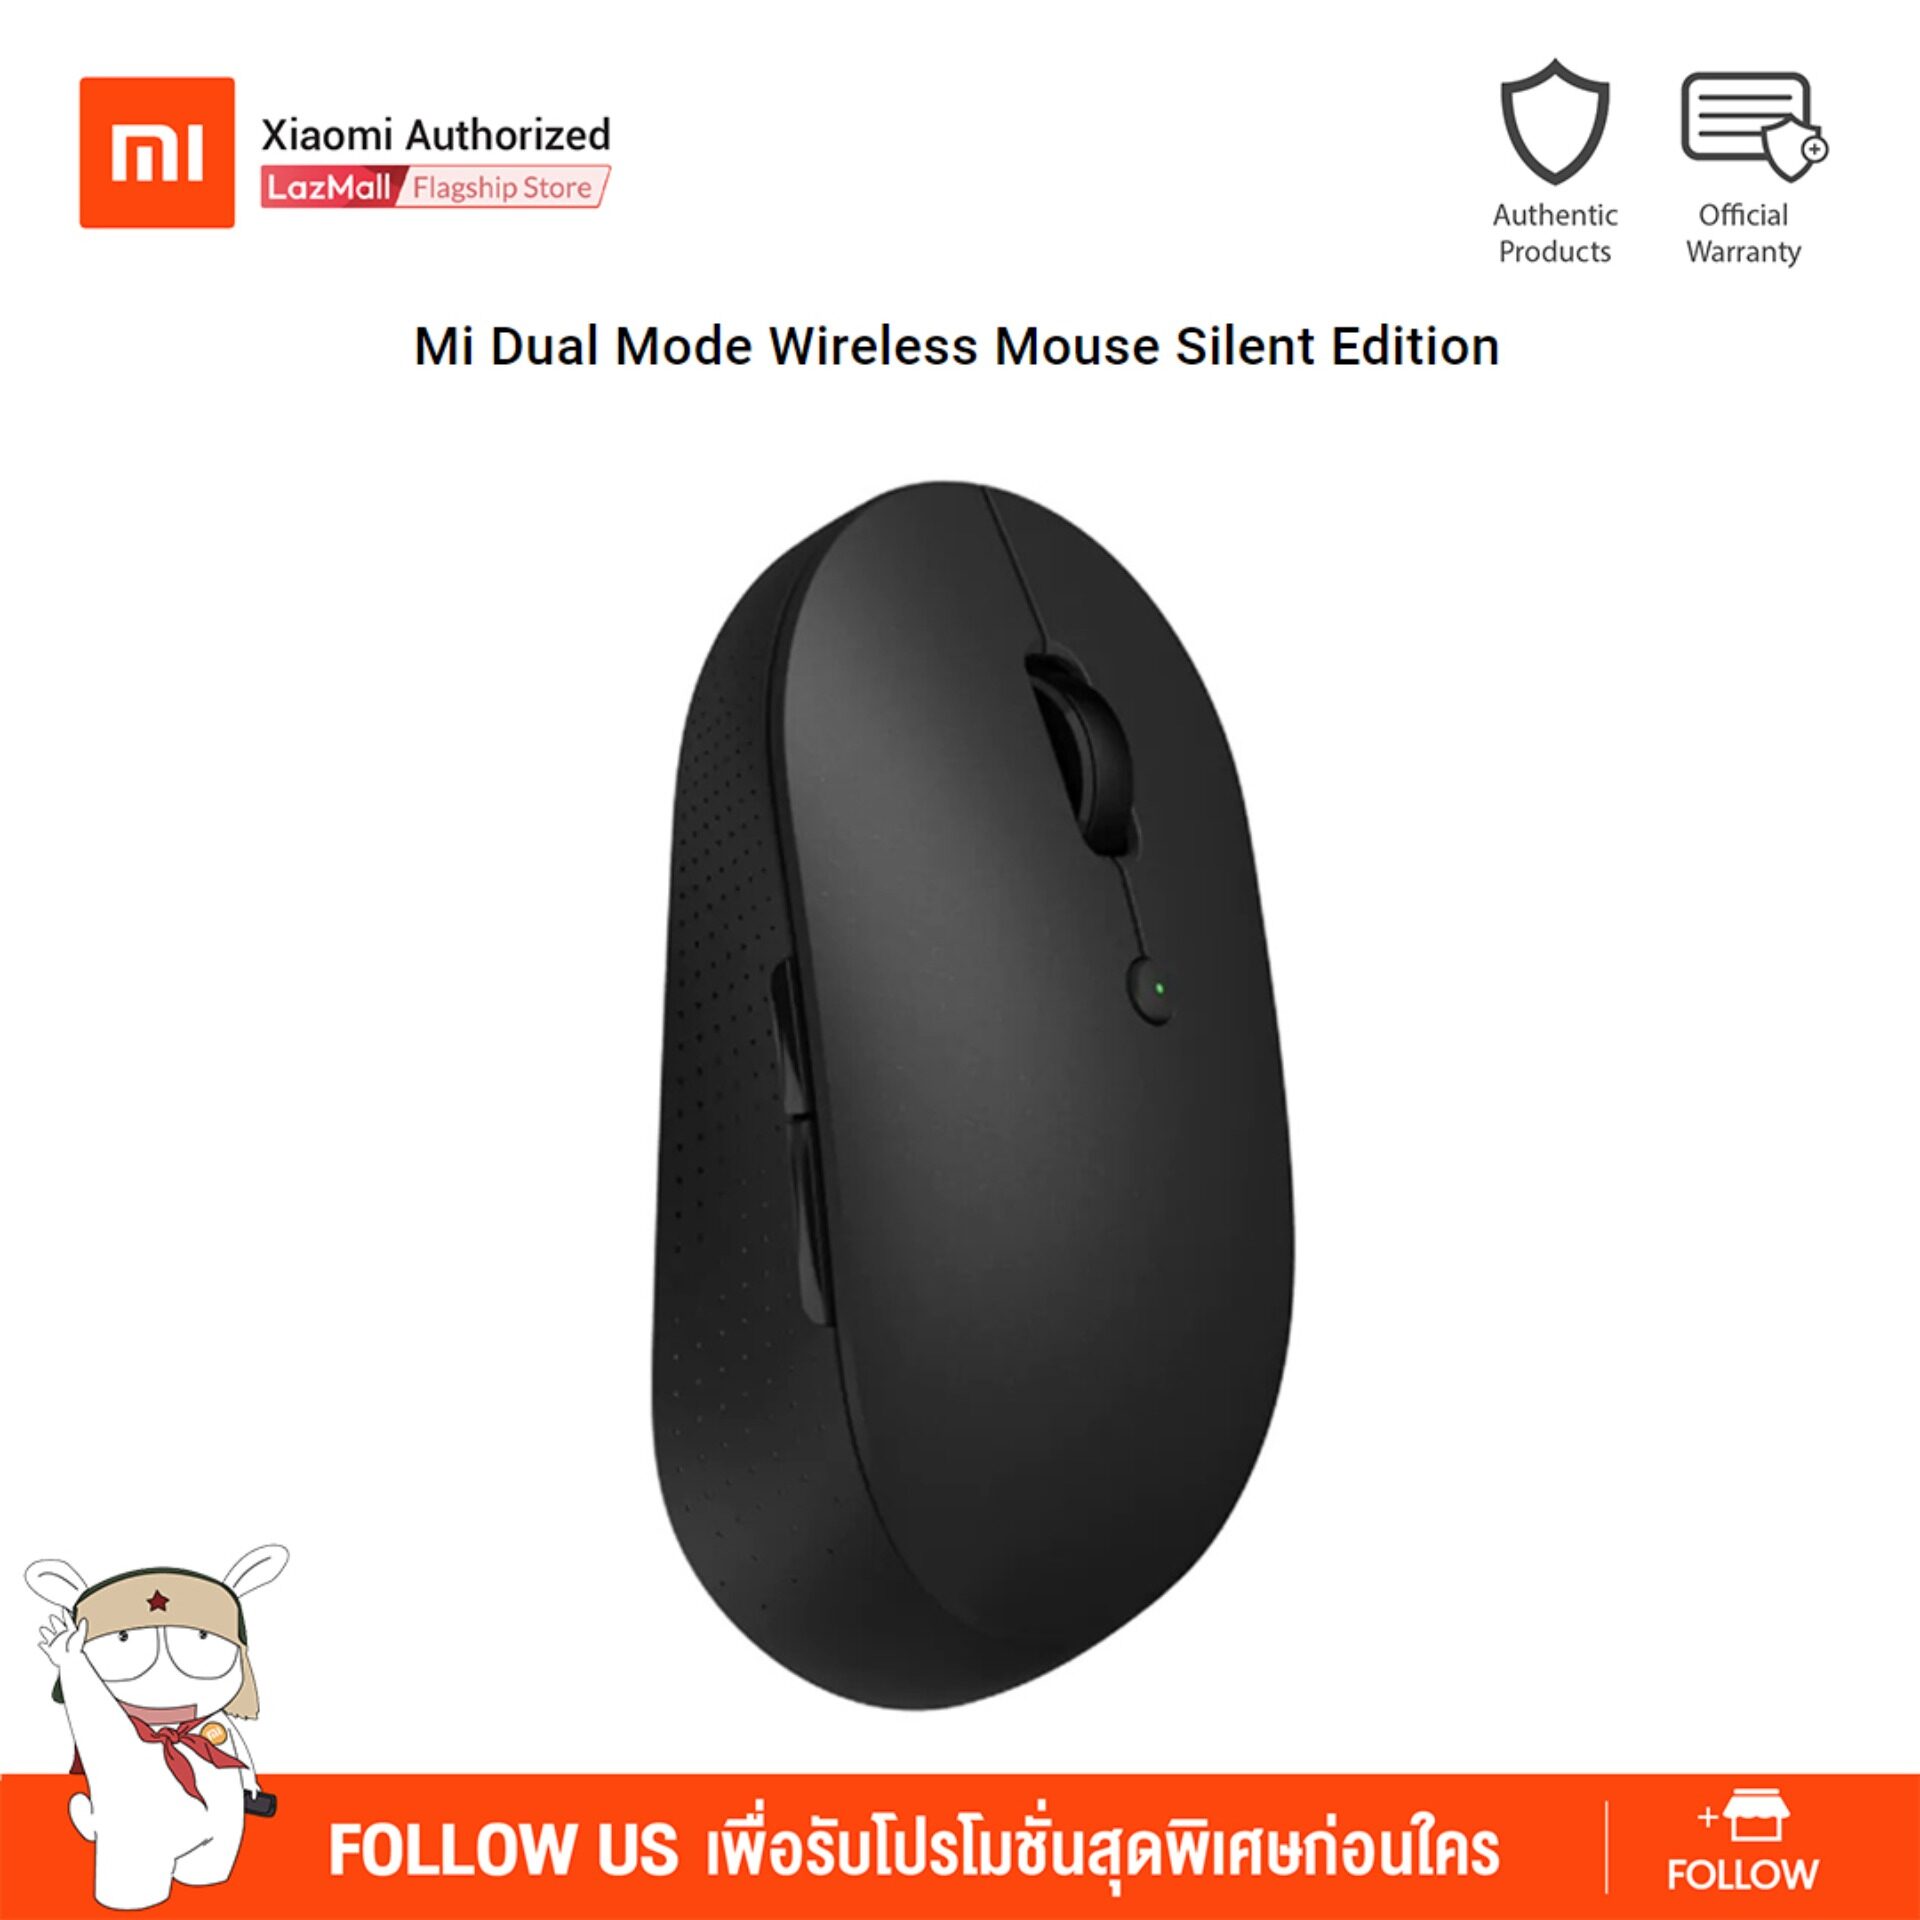 Mi Dual Mode Wireless Mouse Silent Edition - ไวเลสเม้าส์ เม้าส์ไร้สาย แบบ Dual Mode รุ่น Silent Edition (Global Version)